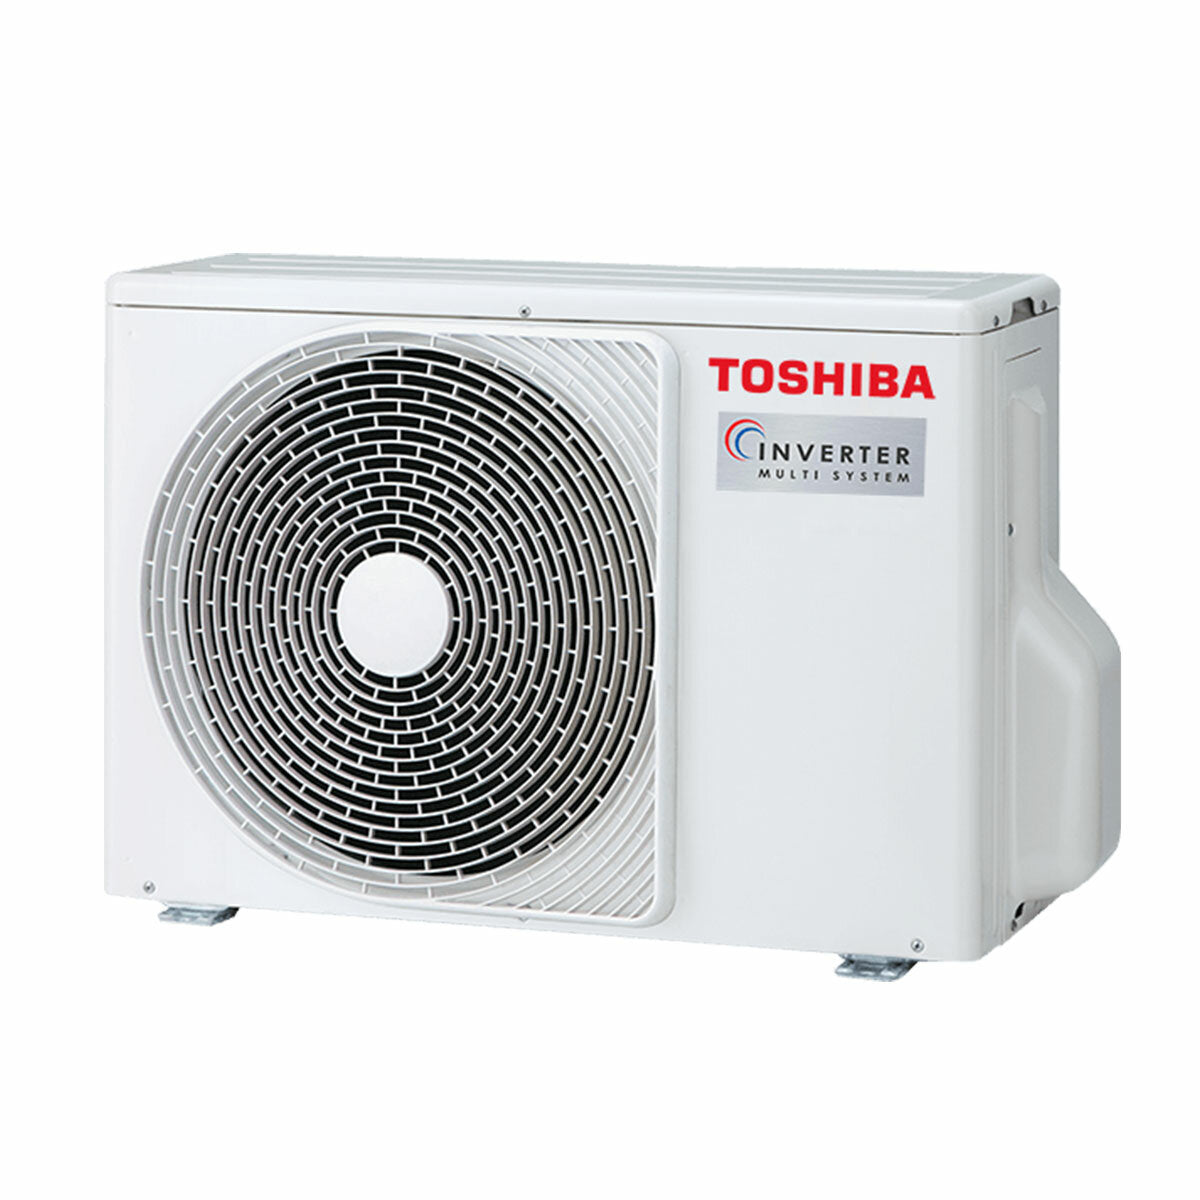 Toshiba ducted air conditioner U2 trial split 9000+9000+16000 BTU inverter A+++ external unit 7 kW